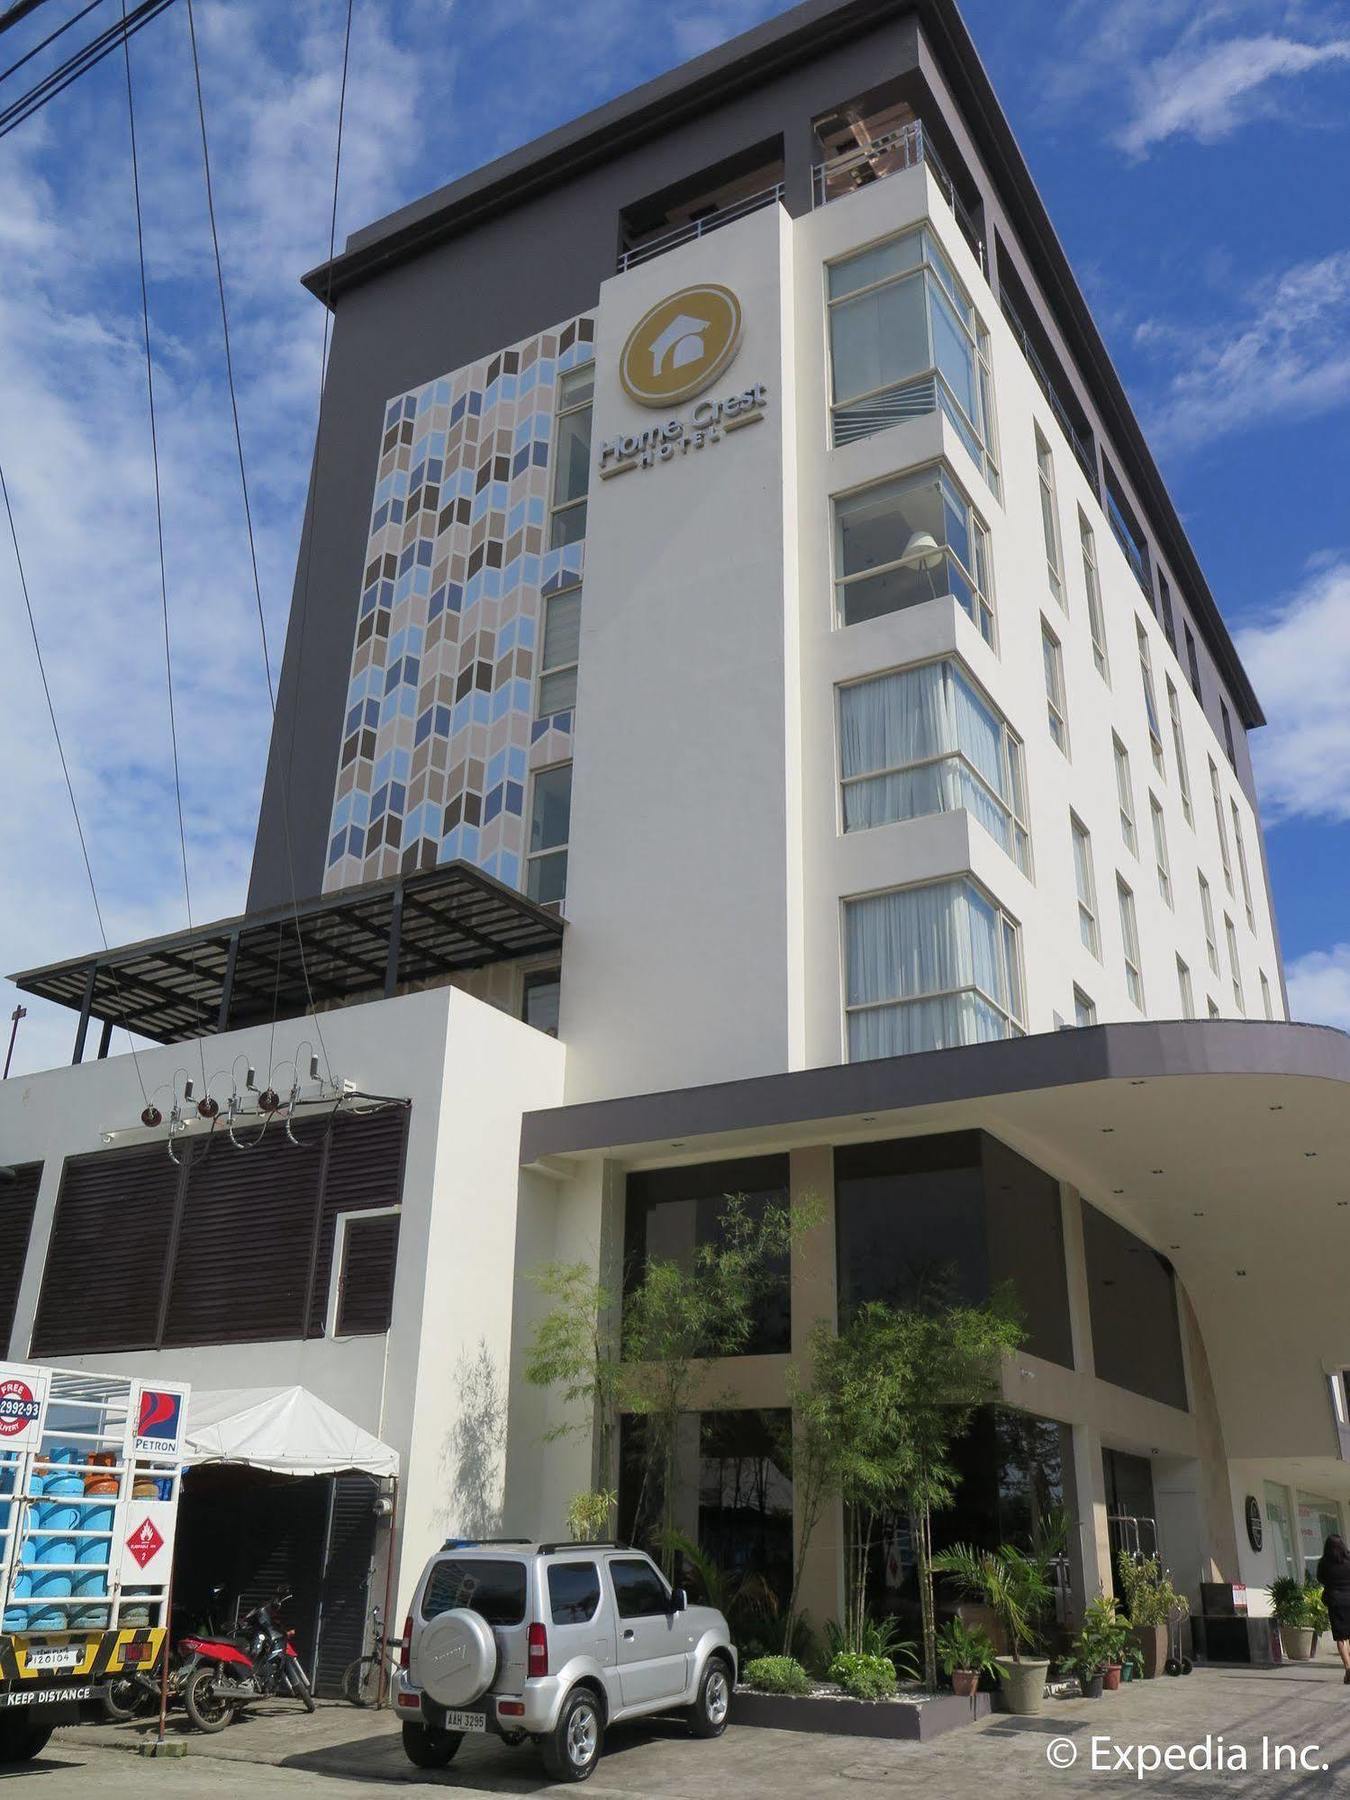 Home Crest Hotel Davao Stadt Exterior foto